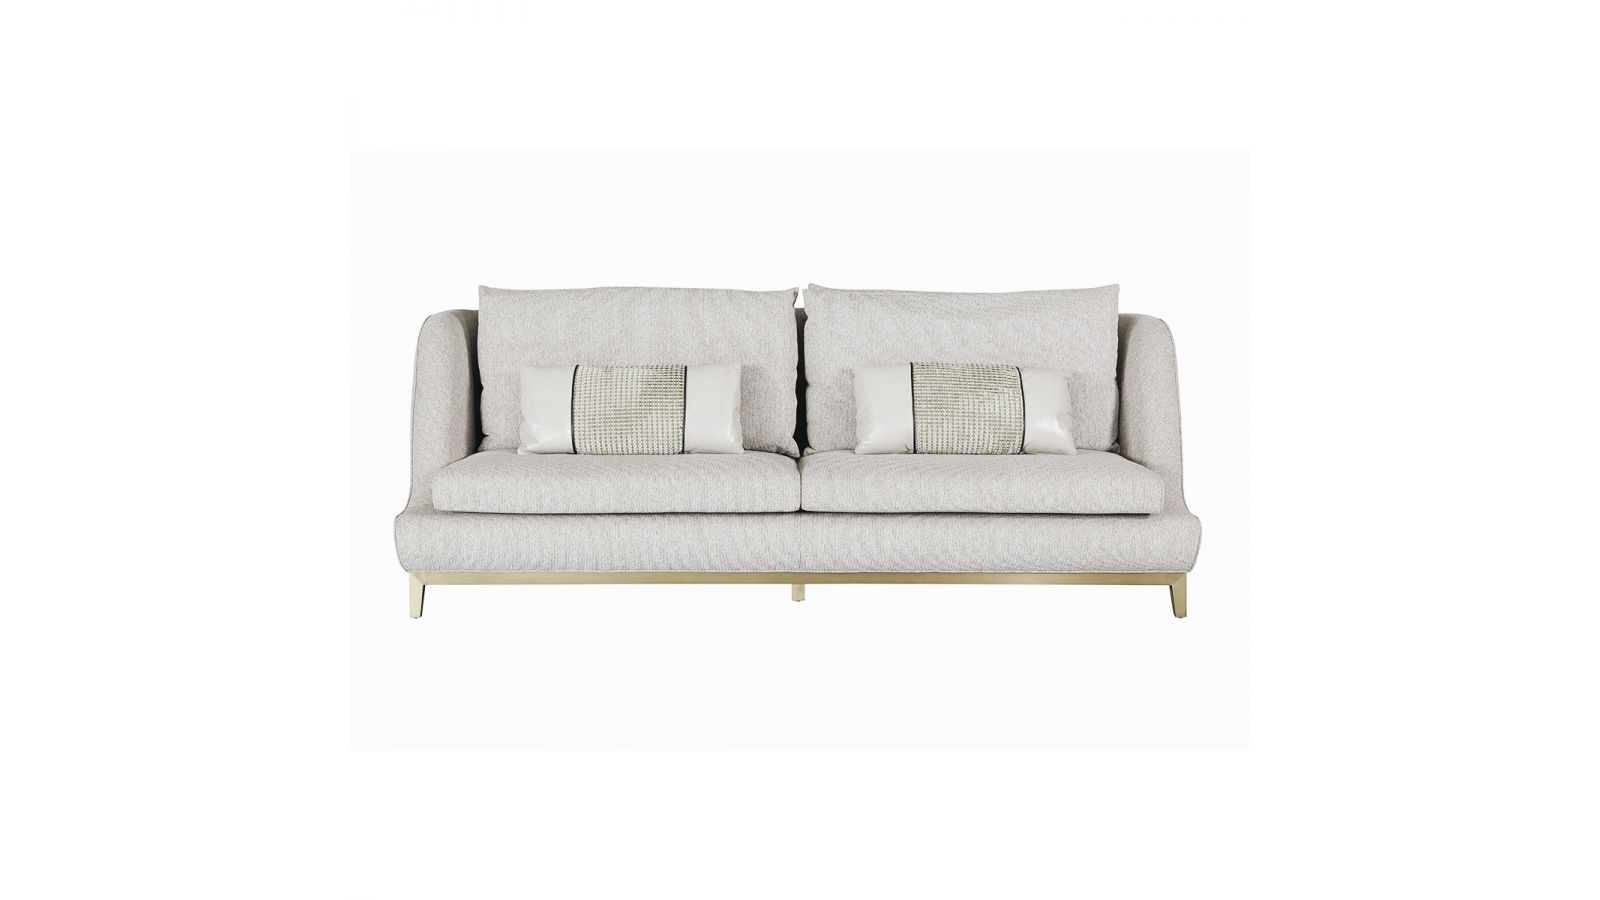 Two-Toned Sofa